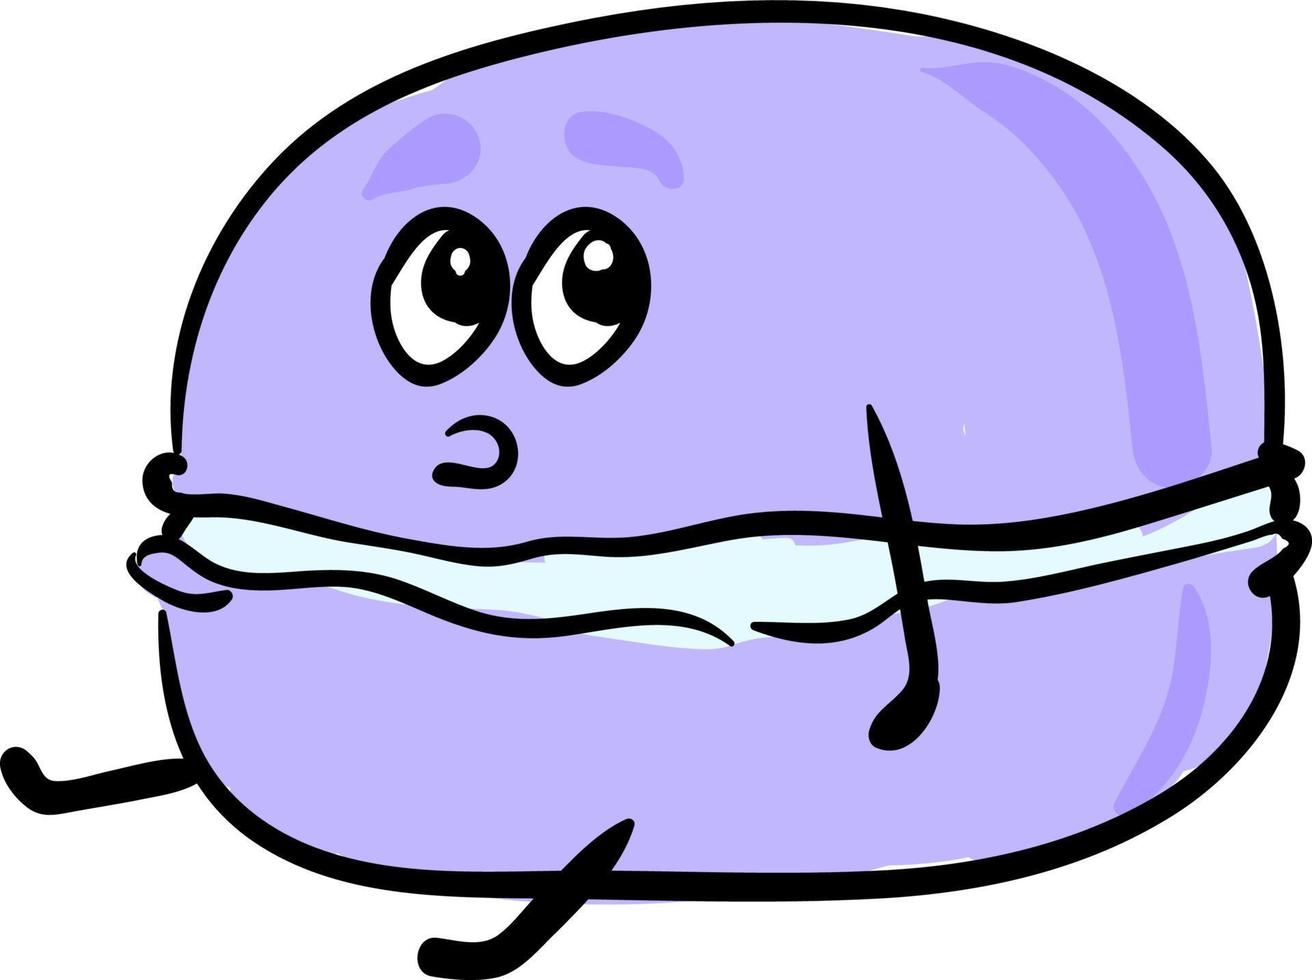 Macaron púrpura asustado, ilustración, vector sobre fondo blanco.